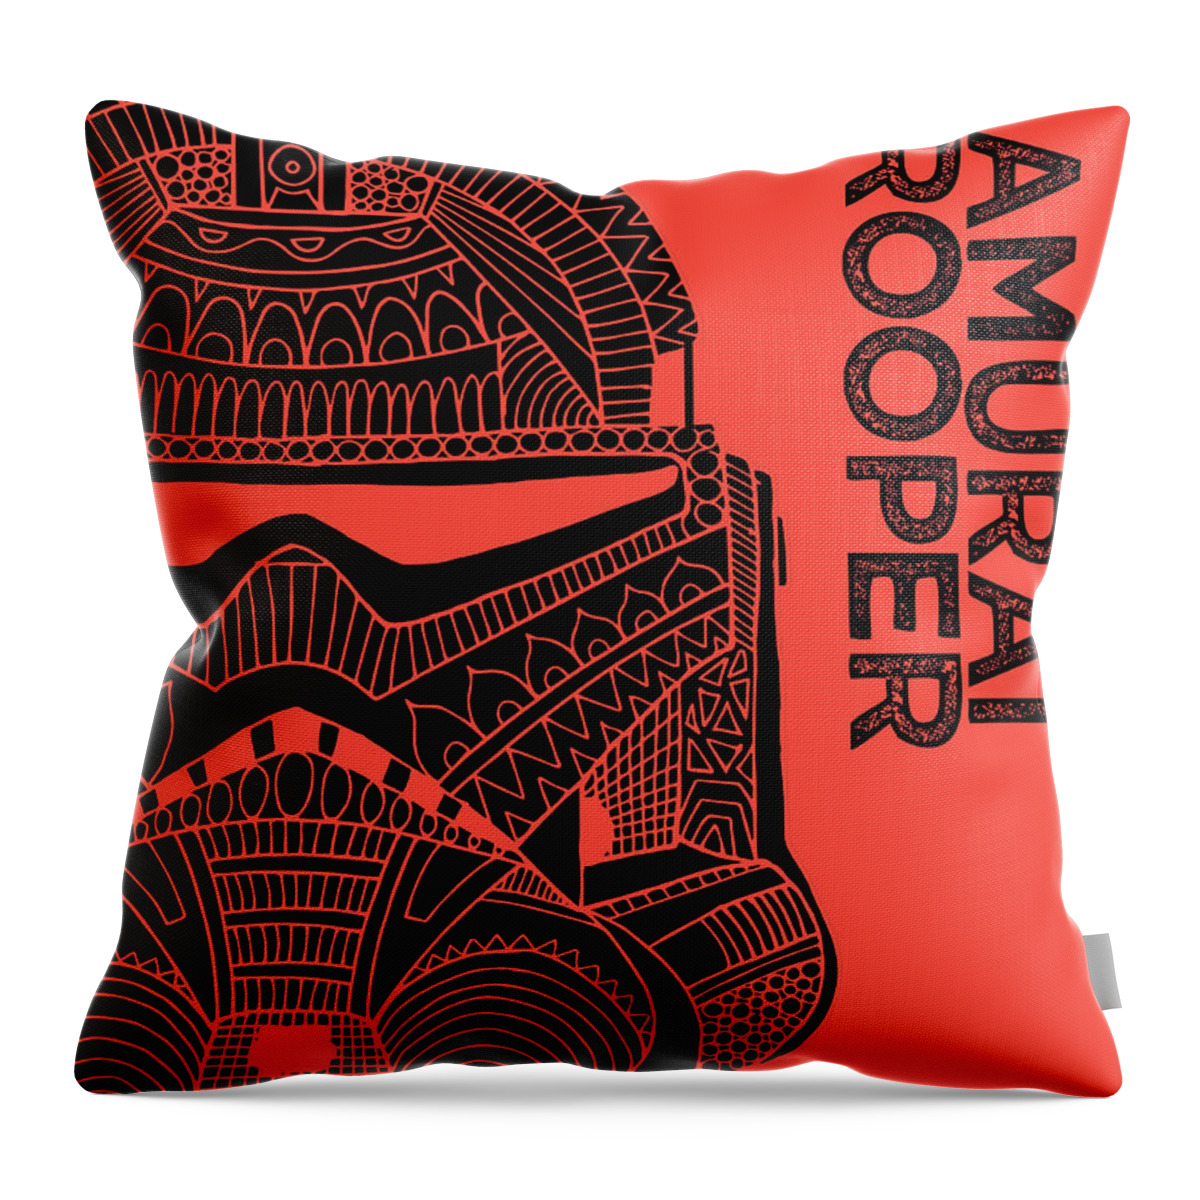 Stormtrooper Throw Pillow featuring the mixed media Stormtrooper Helmet - Red - Star Wars Art by Studio Grafiikka